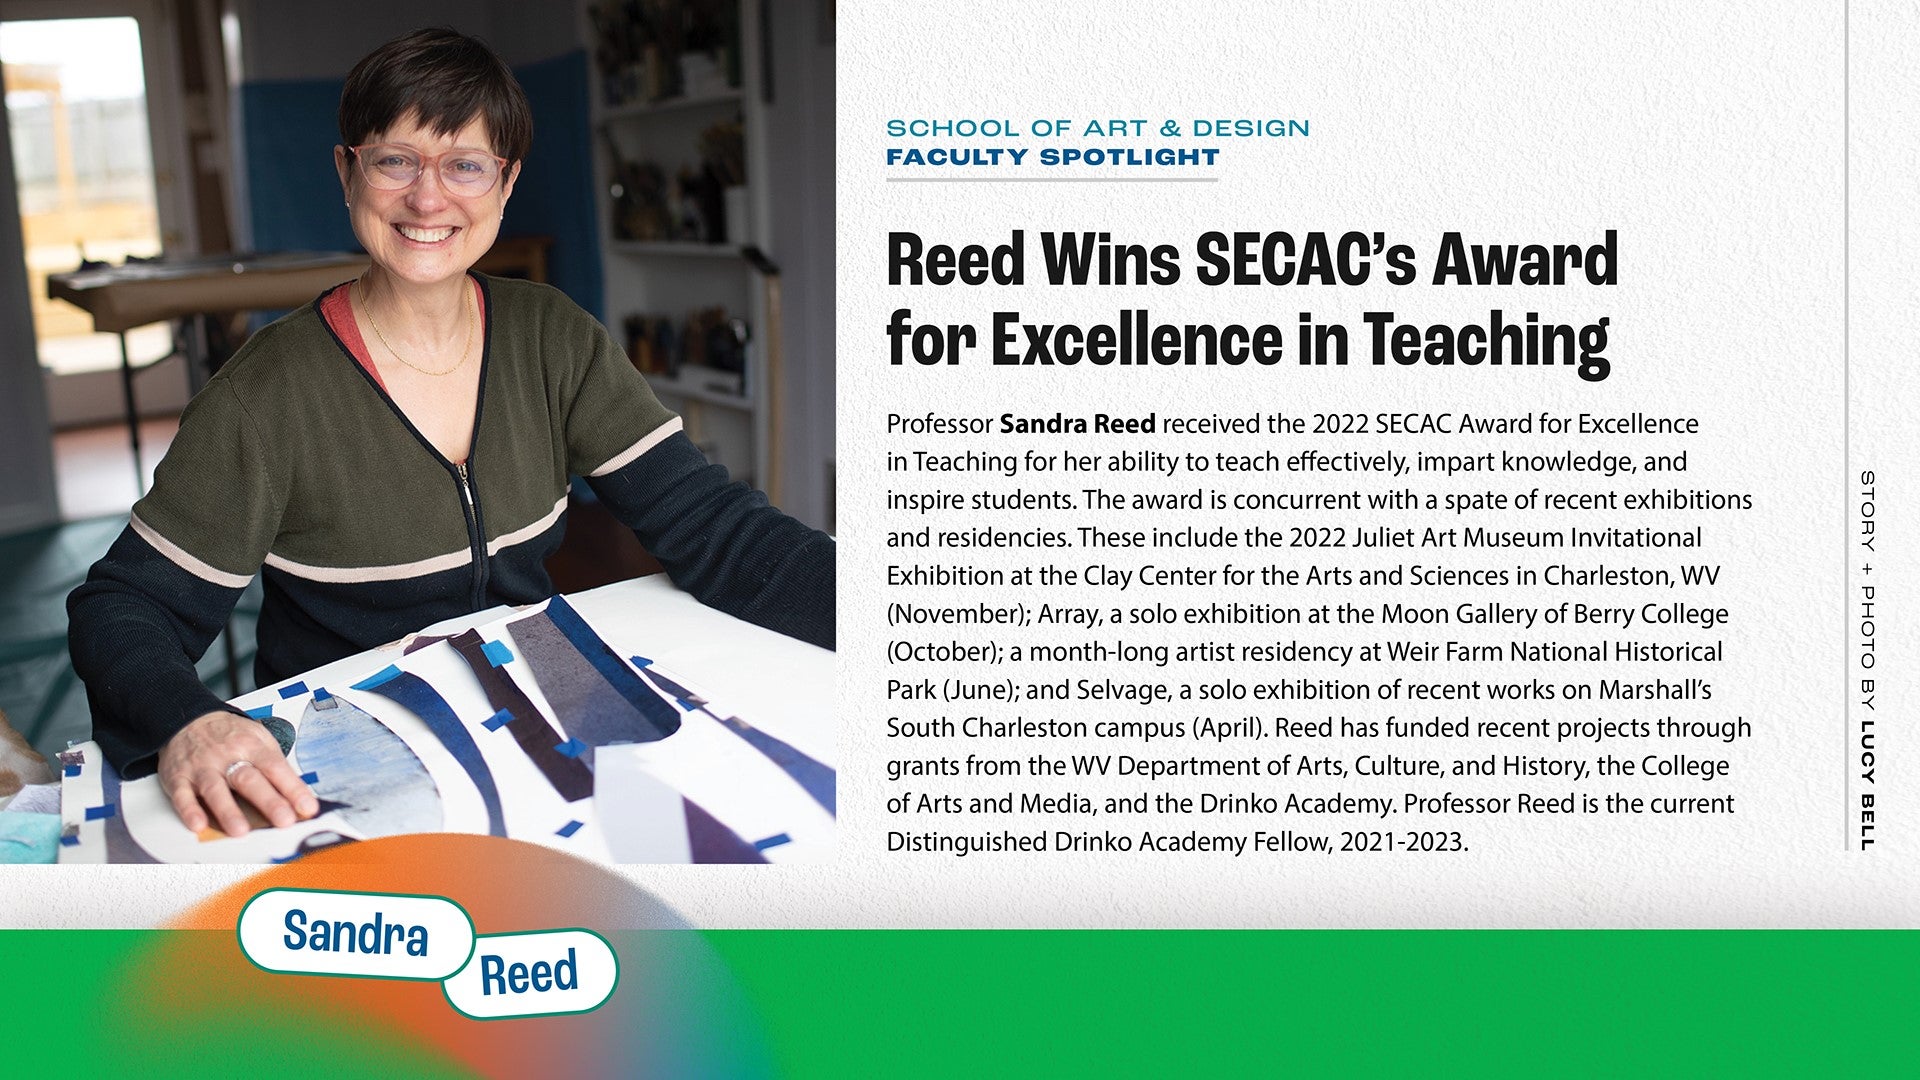 https://www.marshall.edu/art/files/Reed-Wins-SECACs-Award-for-Excellence-in-Teaching.jpg